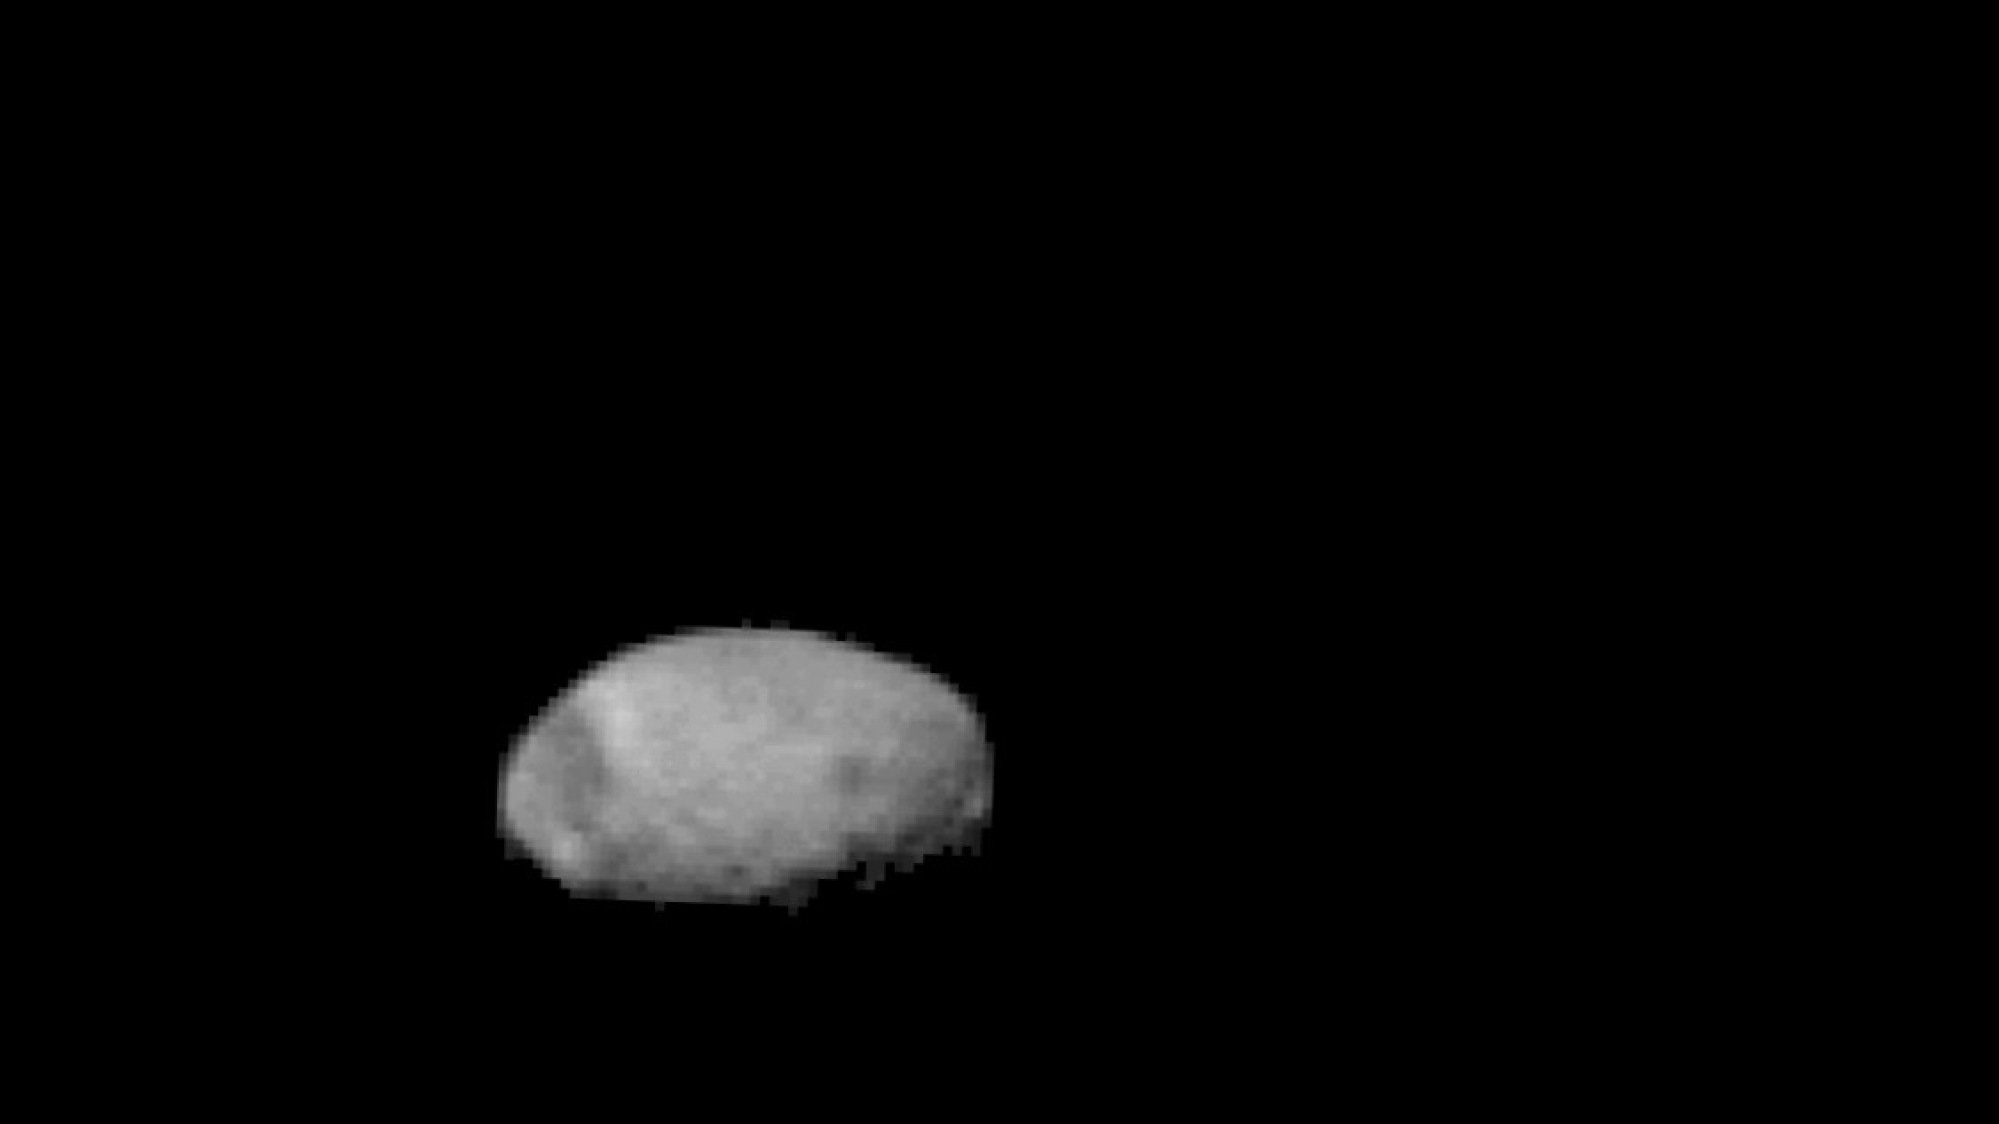 Odyssey observing Phobos